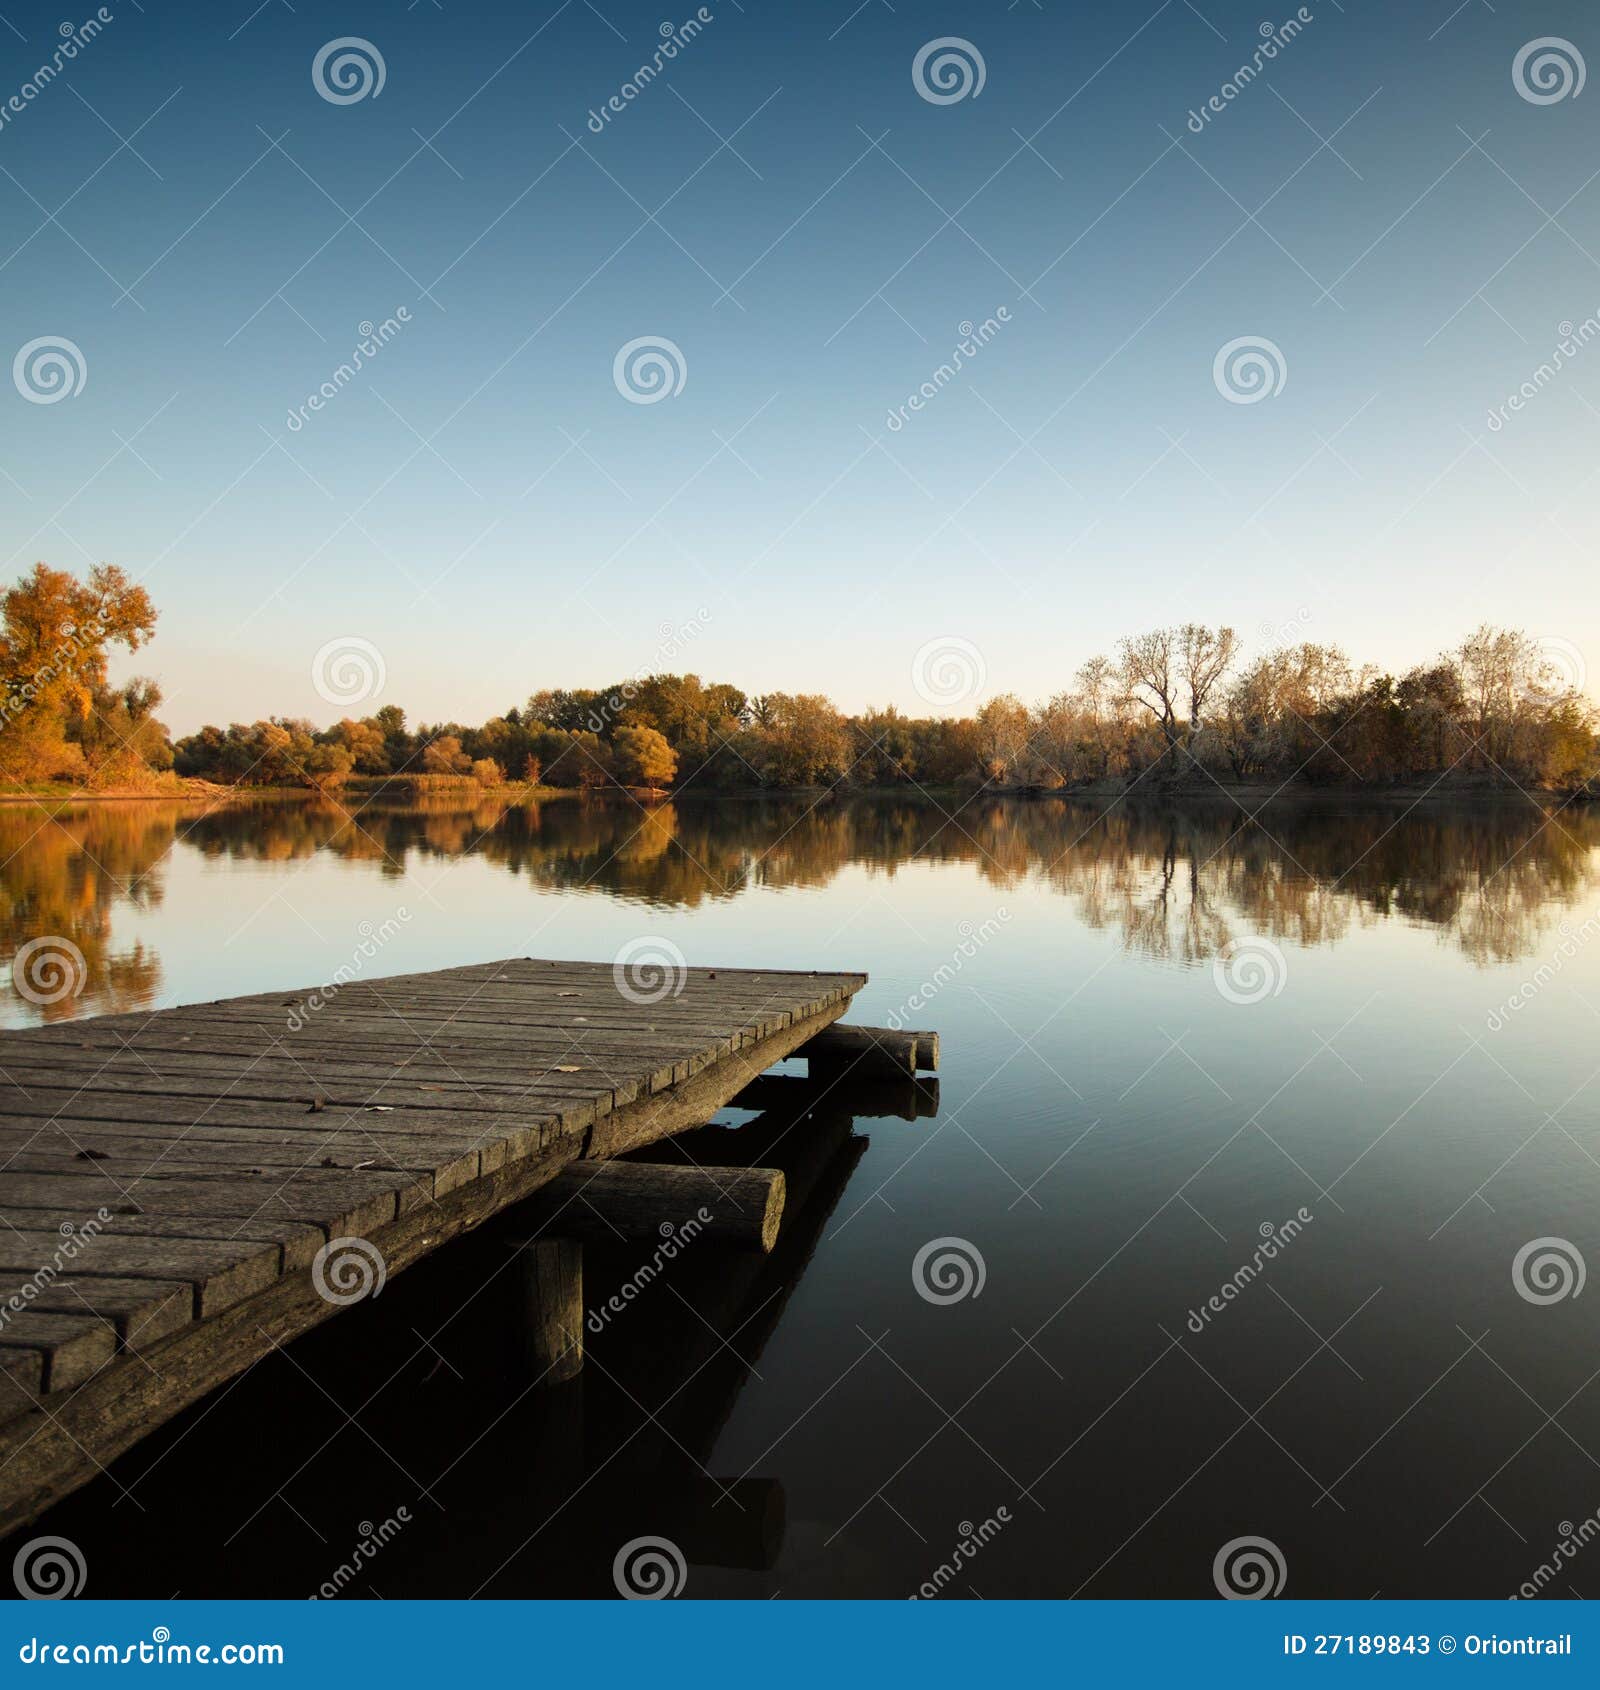 autumn lake scene with wooden dock